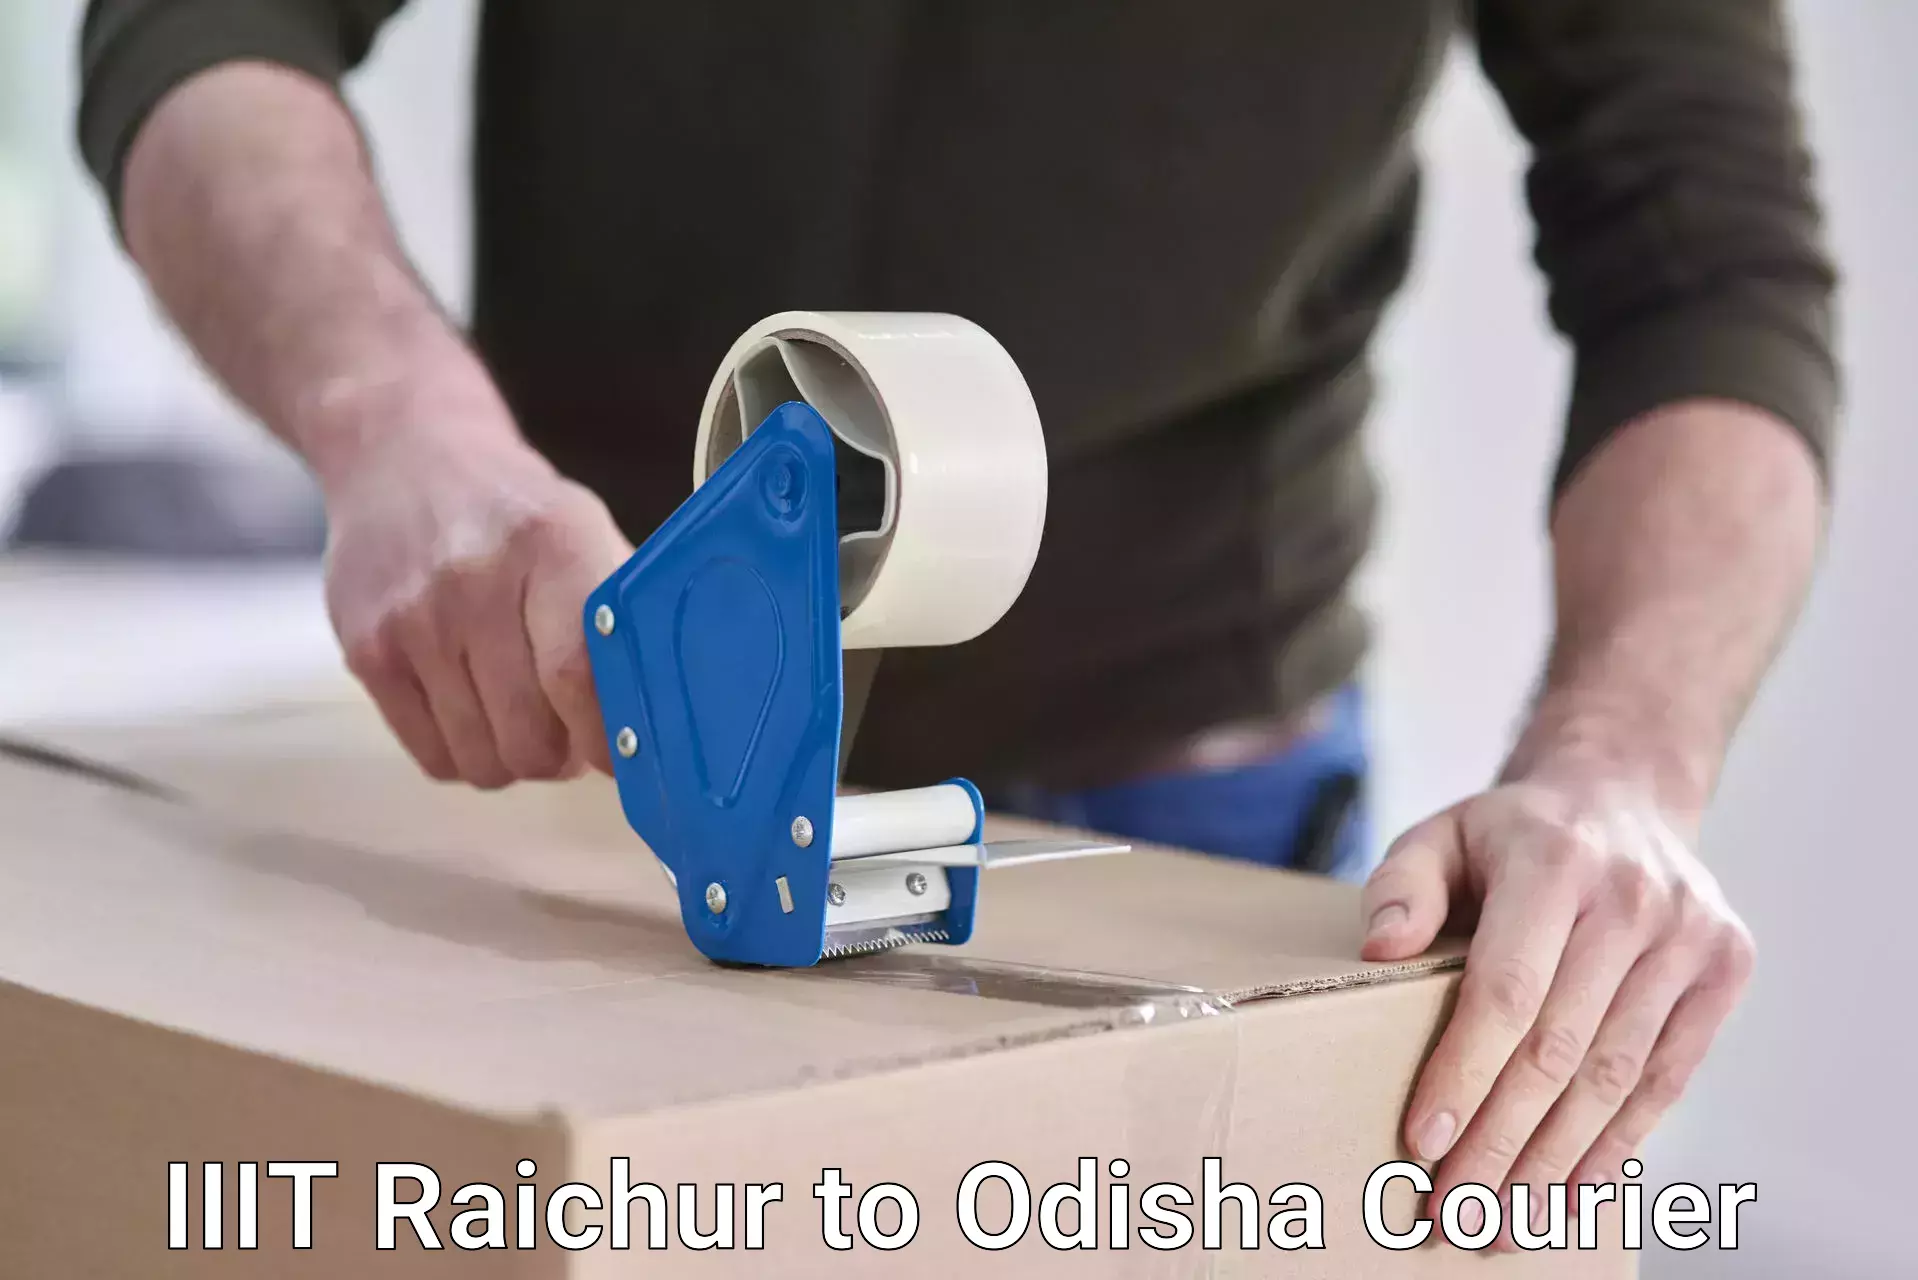 Courier service comparison in IIIT Raichur to Ukhunda